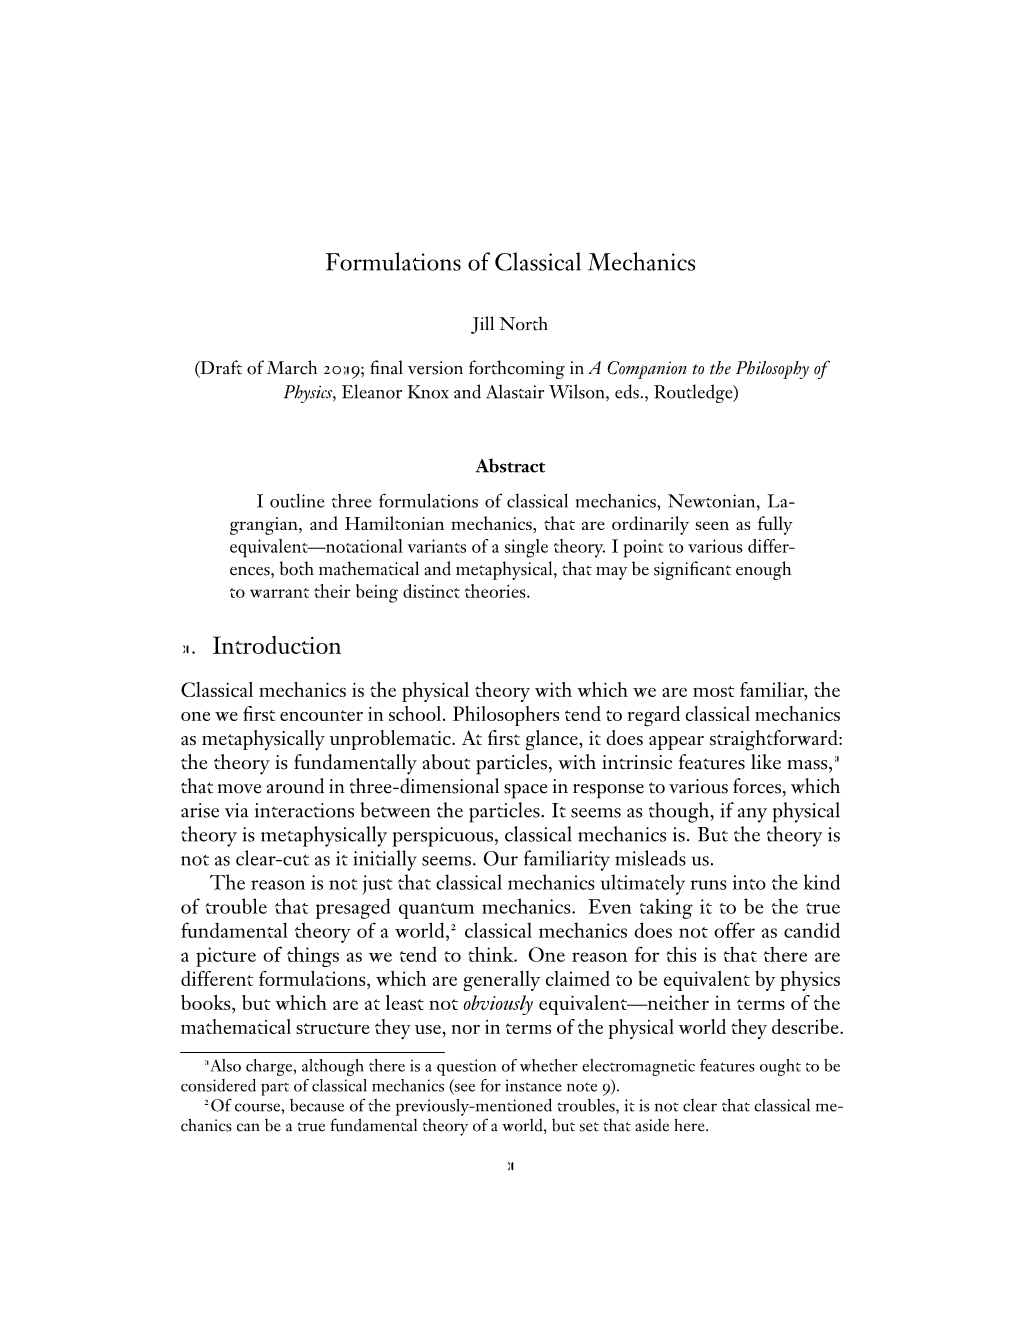 Formulations of Classical Mechanics . Introduction